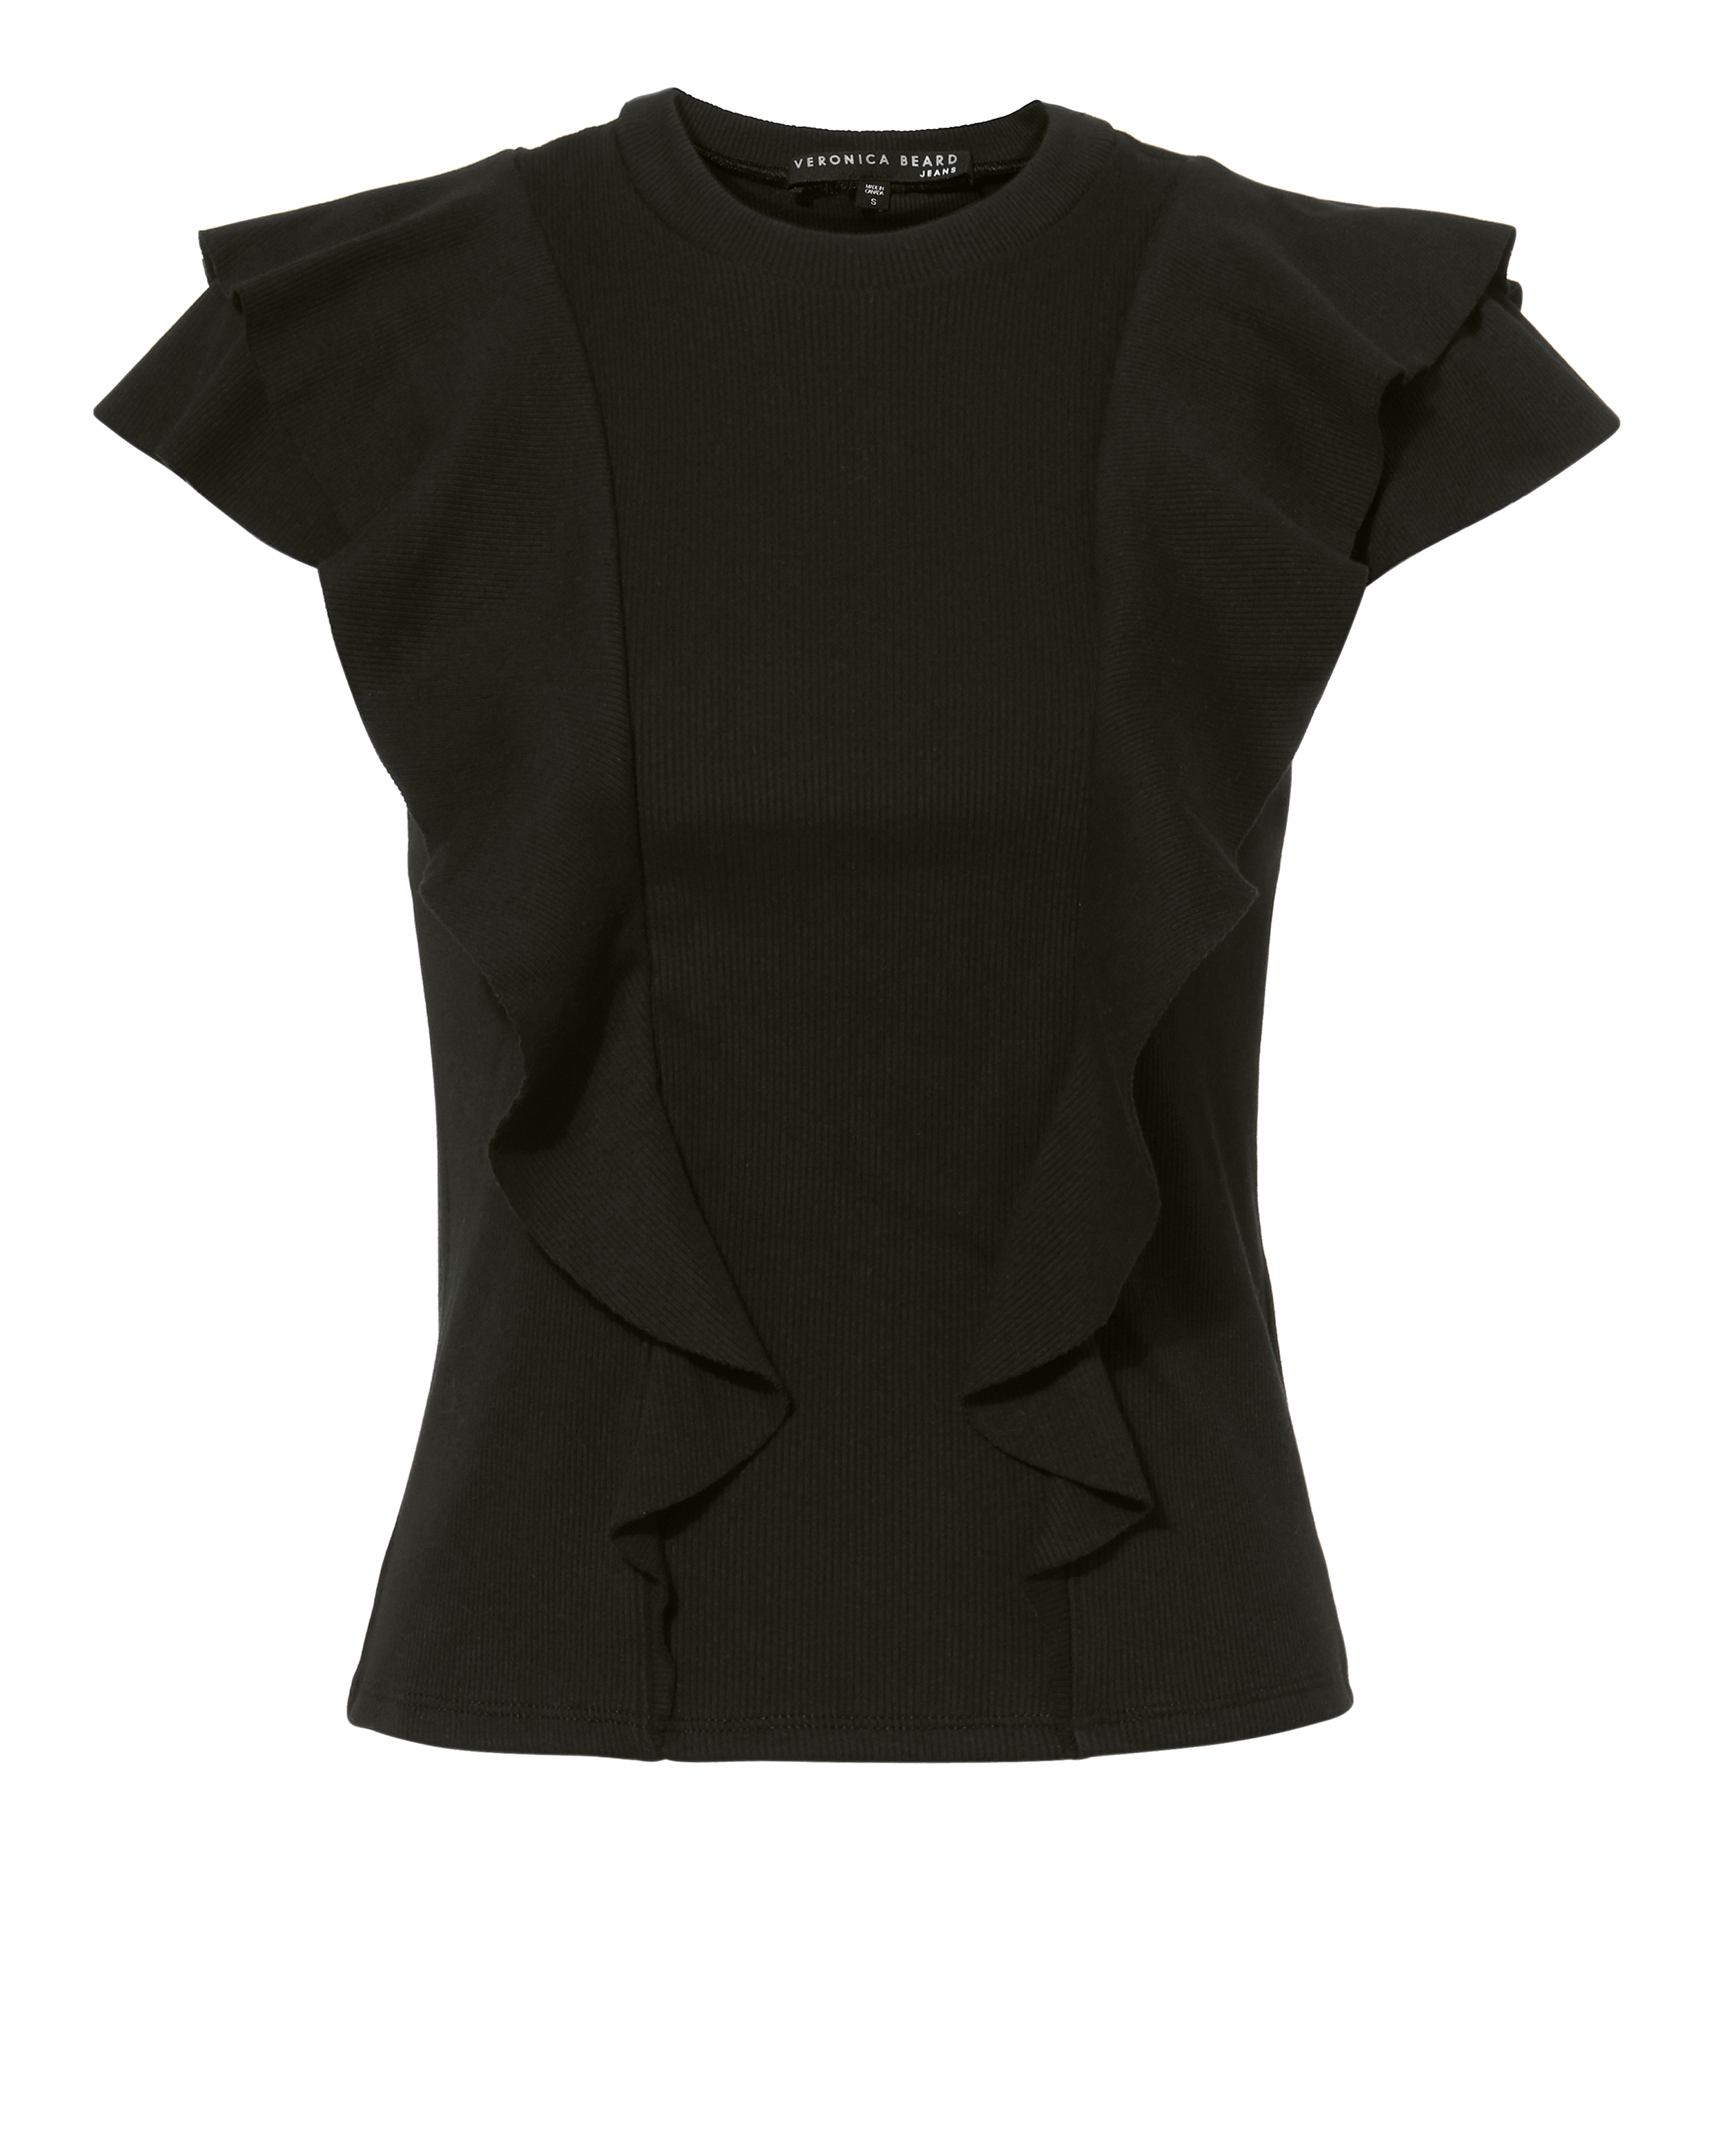 Veronica Beard Bea Ruffle T-Shirt in black | INTERMIX®